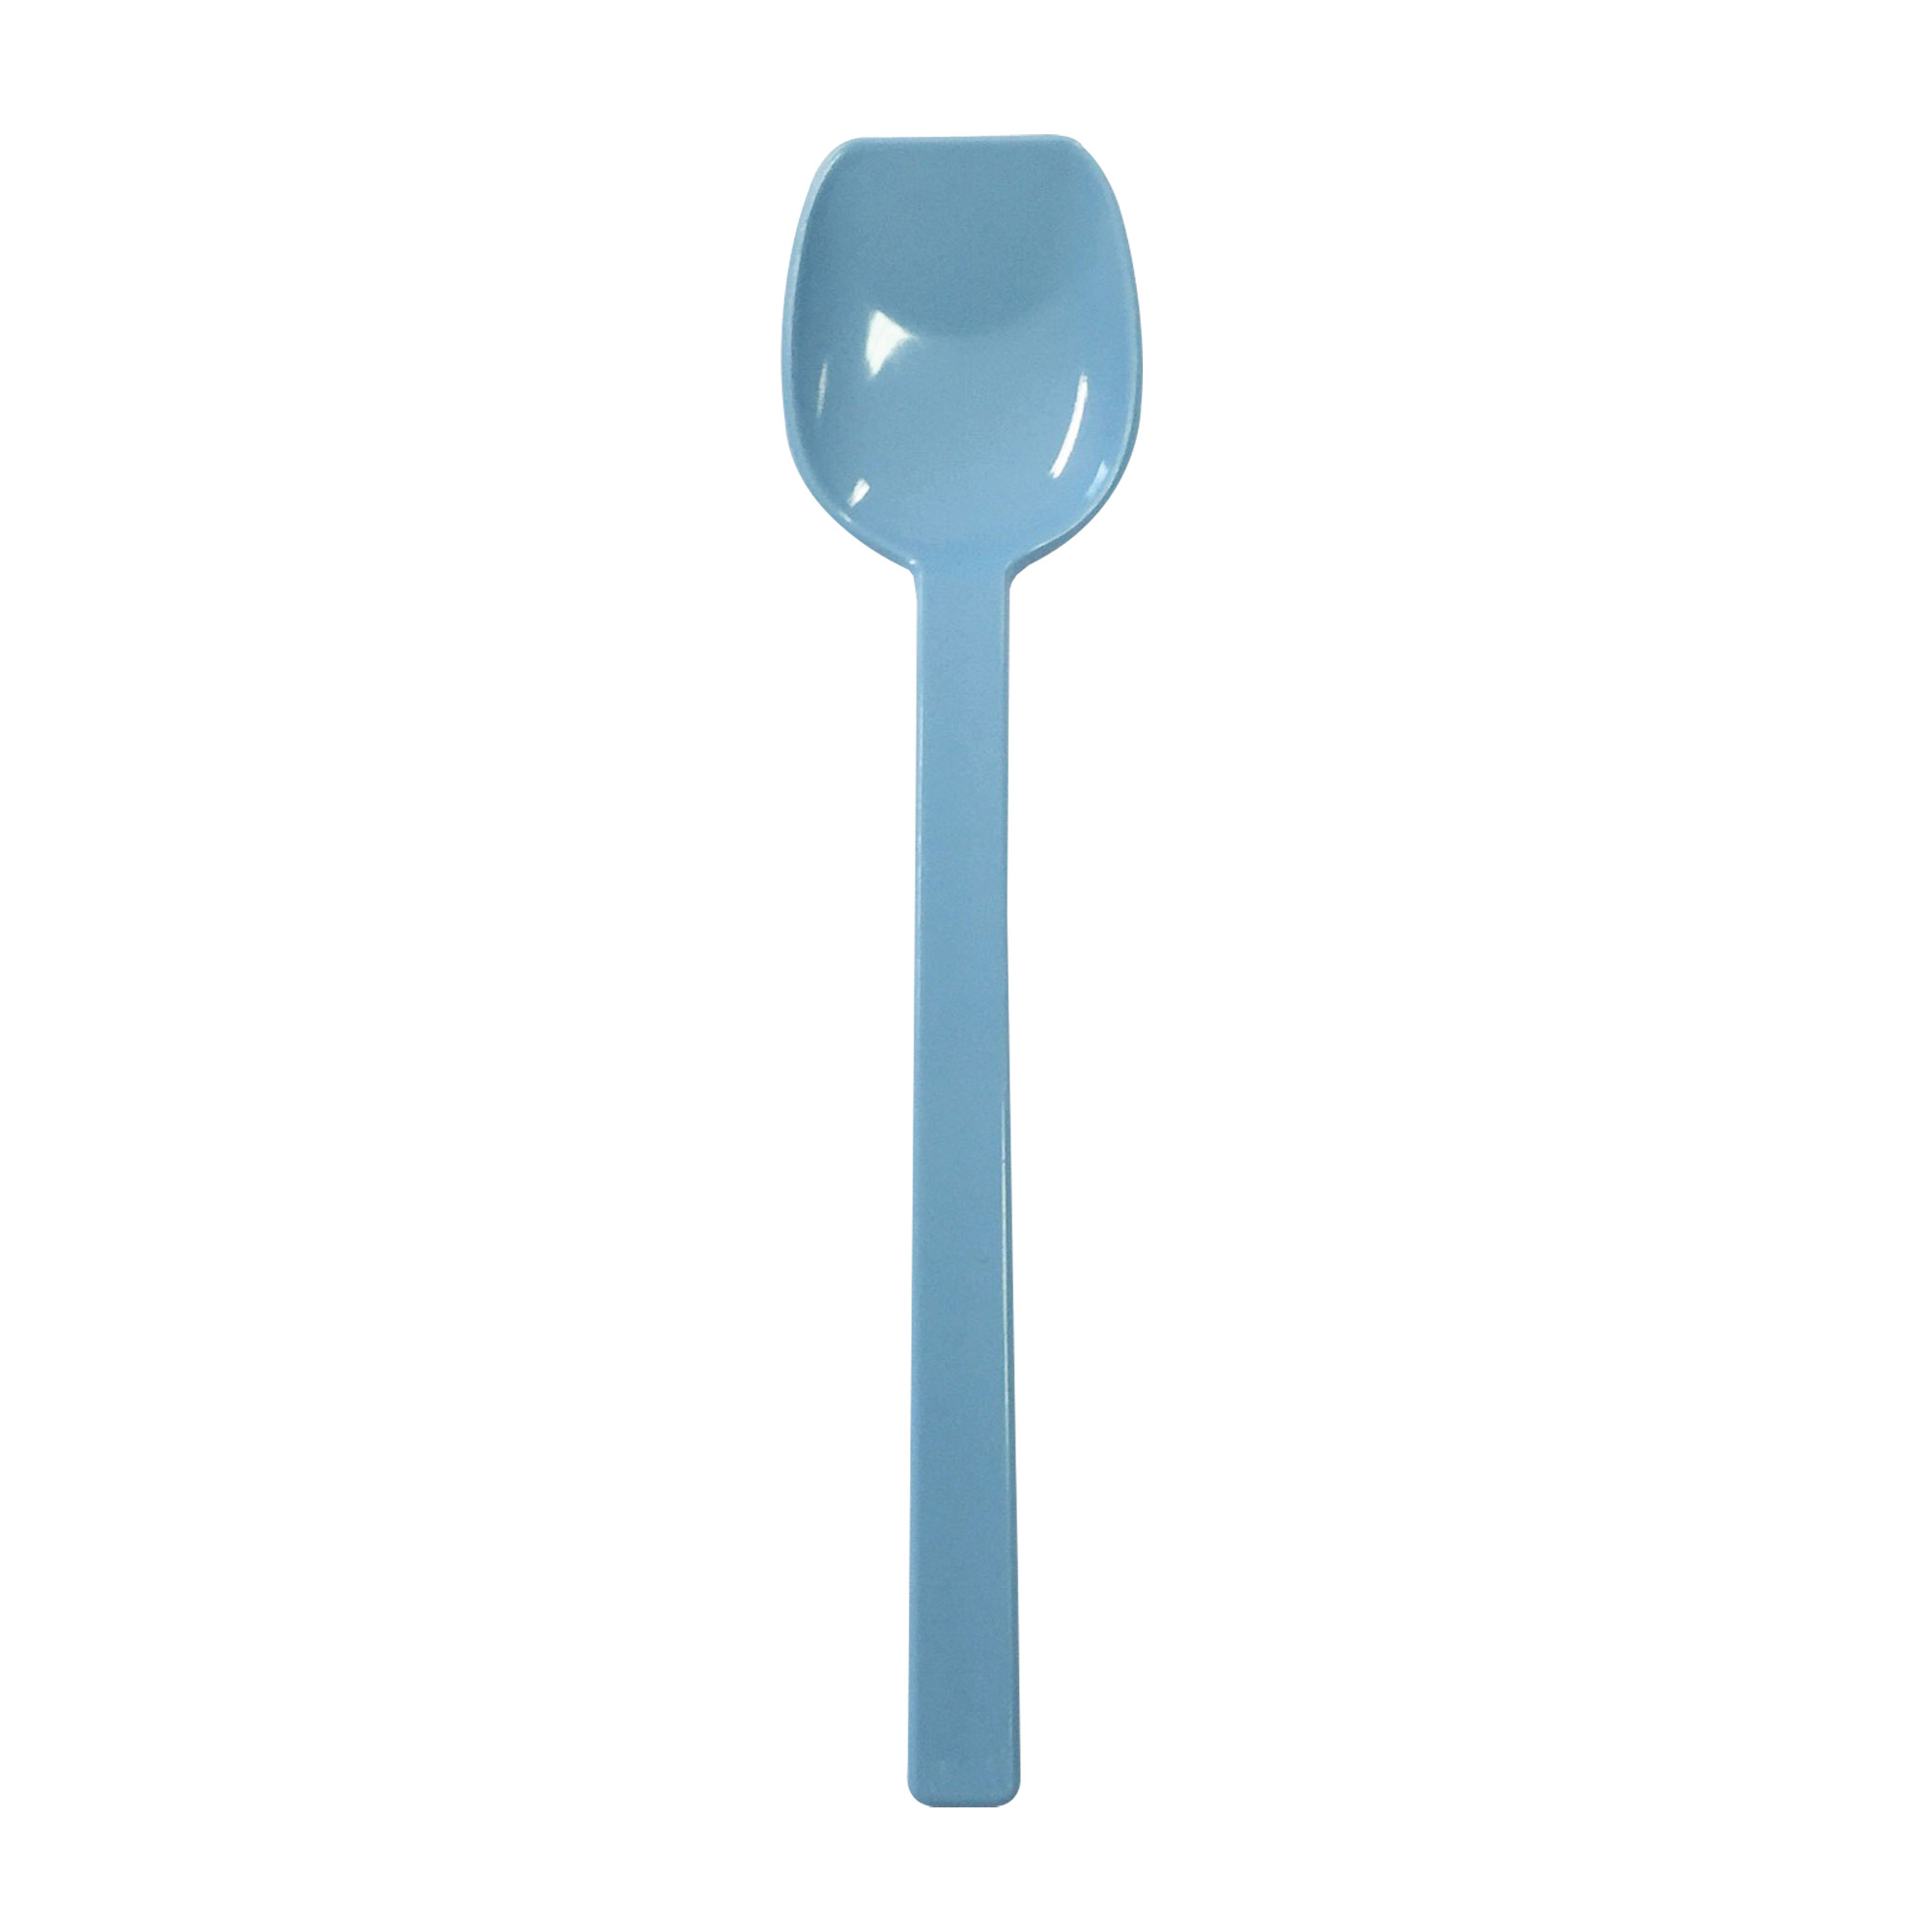 Flat Edge Polycarbonate Spoon (Wide) PALE BLUE - EACH